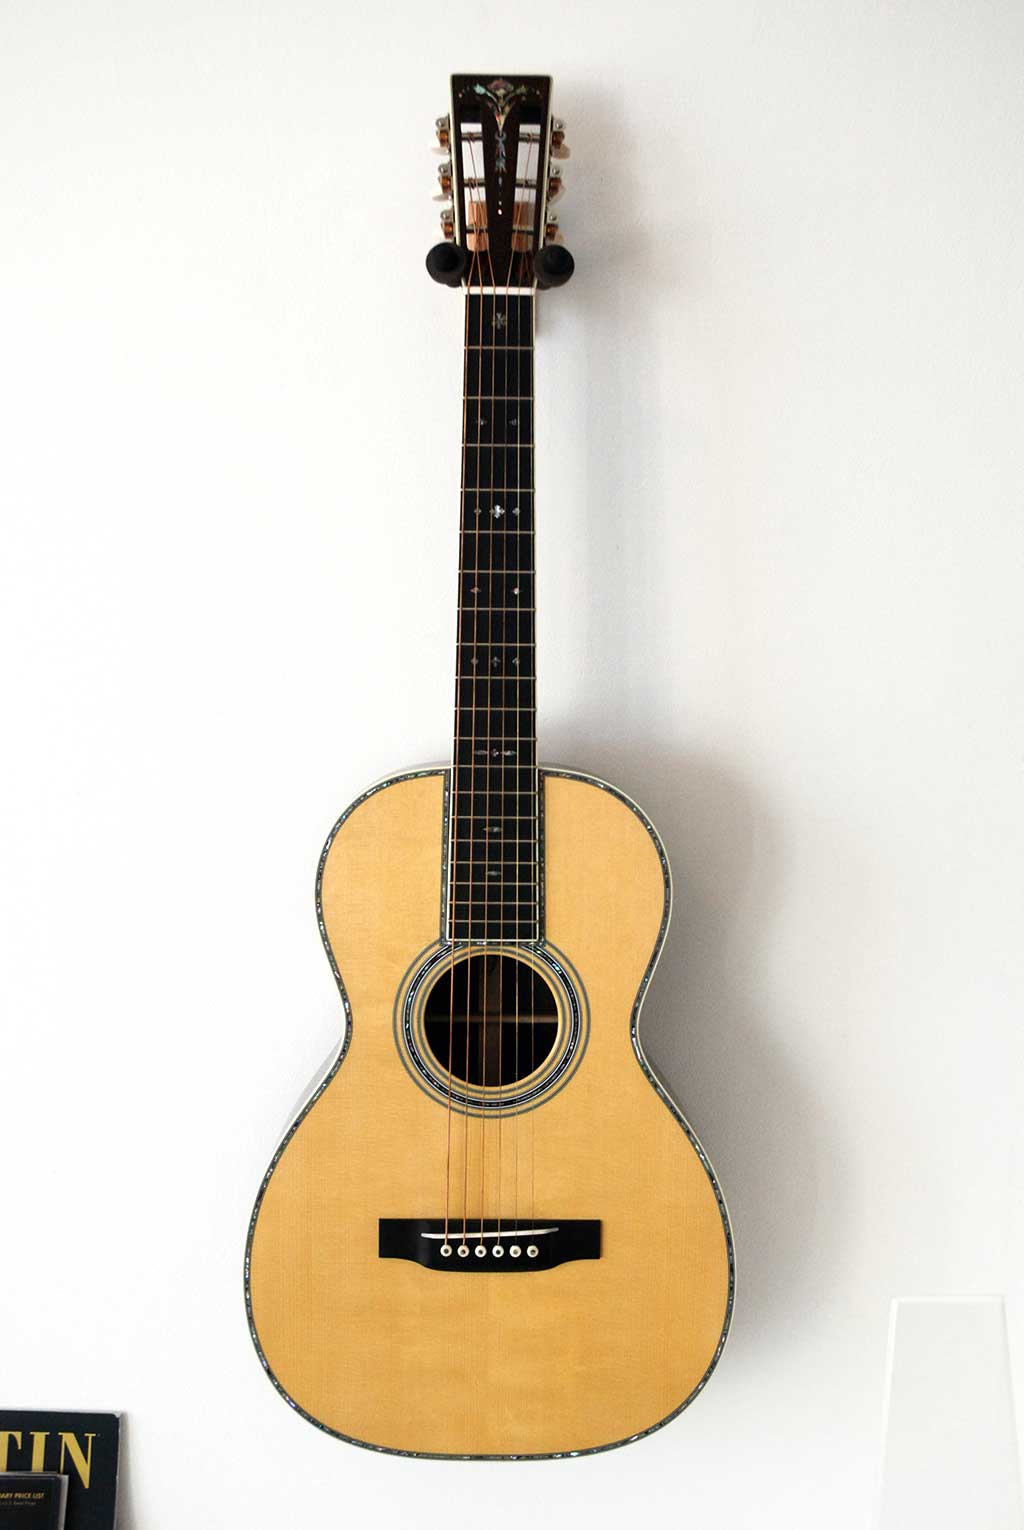 C.F. Martin & Co., 0-42 Martin Custom Shop 'Concert' Acoustic Guitar, 2015, carpathian spruce, guatemalan rosewood, crained ivoroid, mahogany, ebony, bone, abalone inlay.